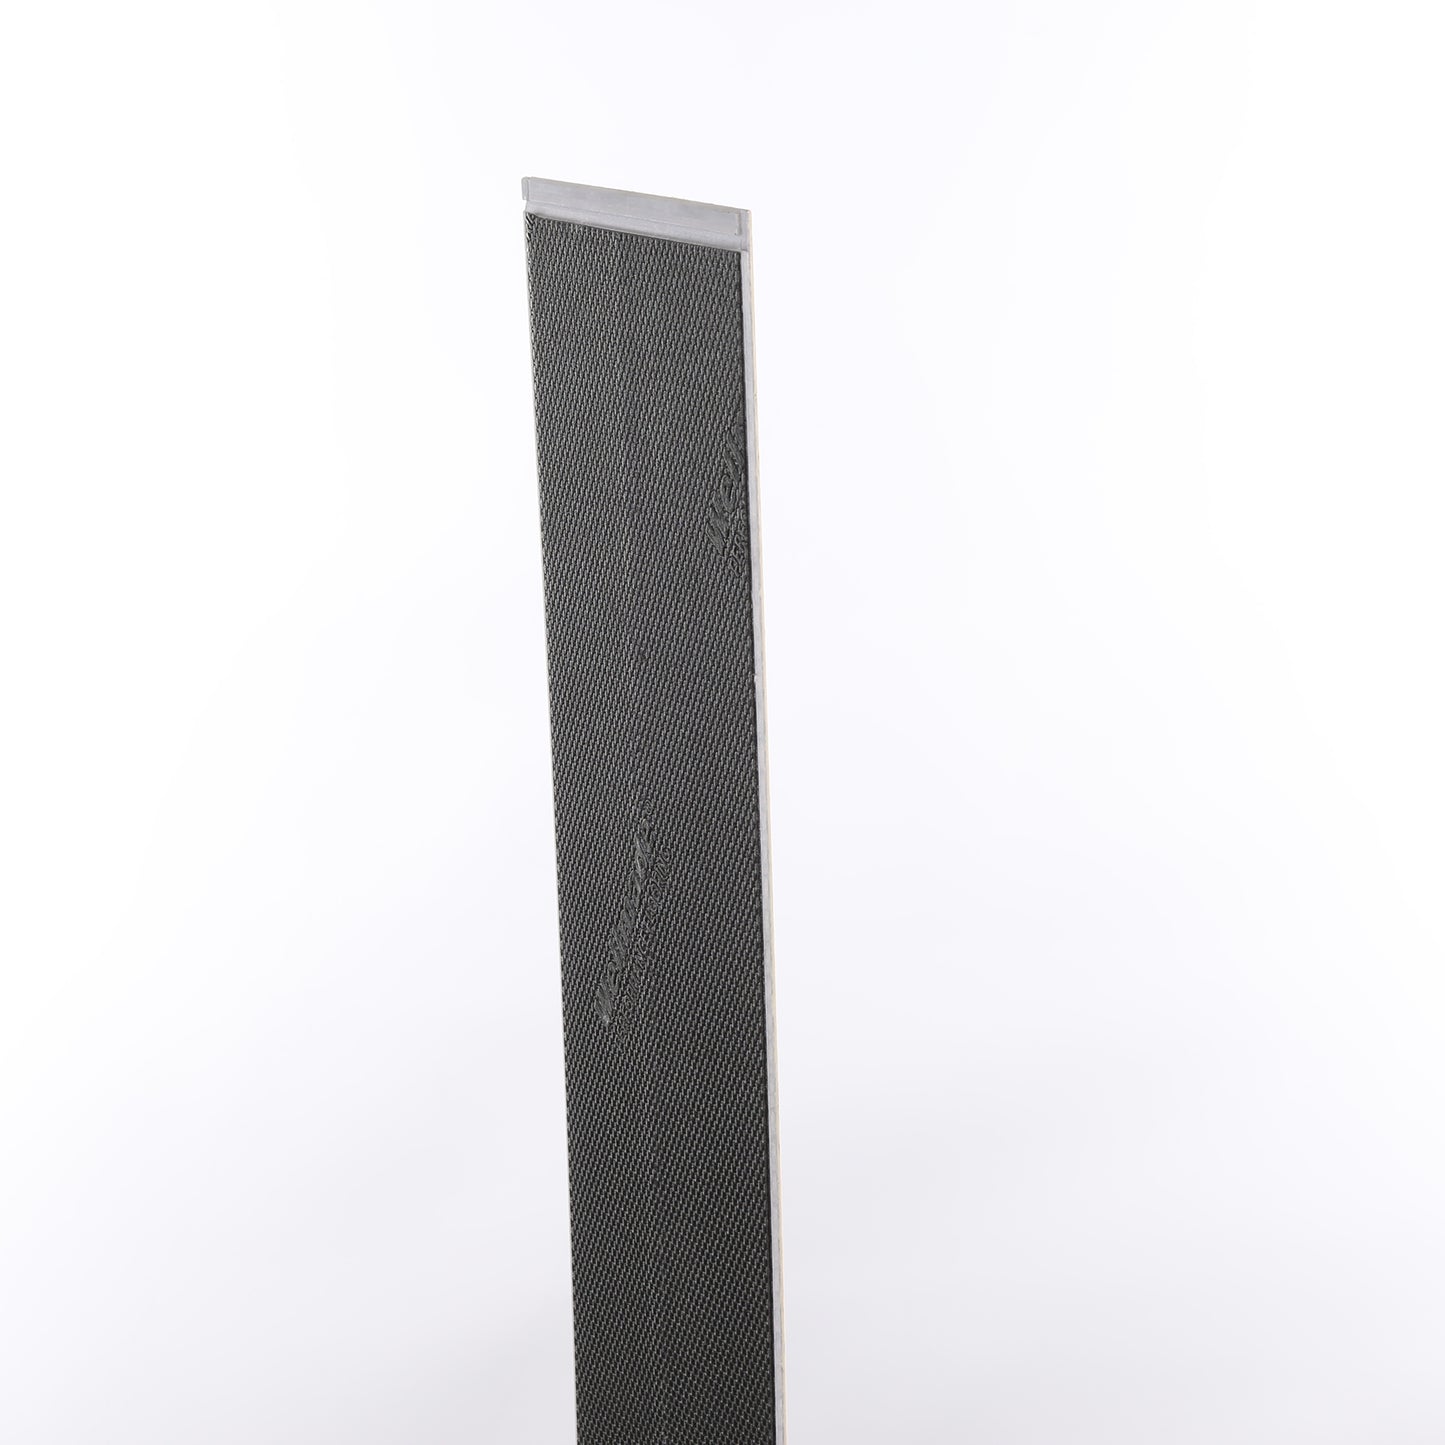 7mm Ivory Lace Waterproof Engineered Hardwood Flooring 5 in. Wide x Varying Length Long